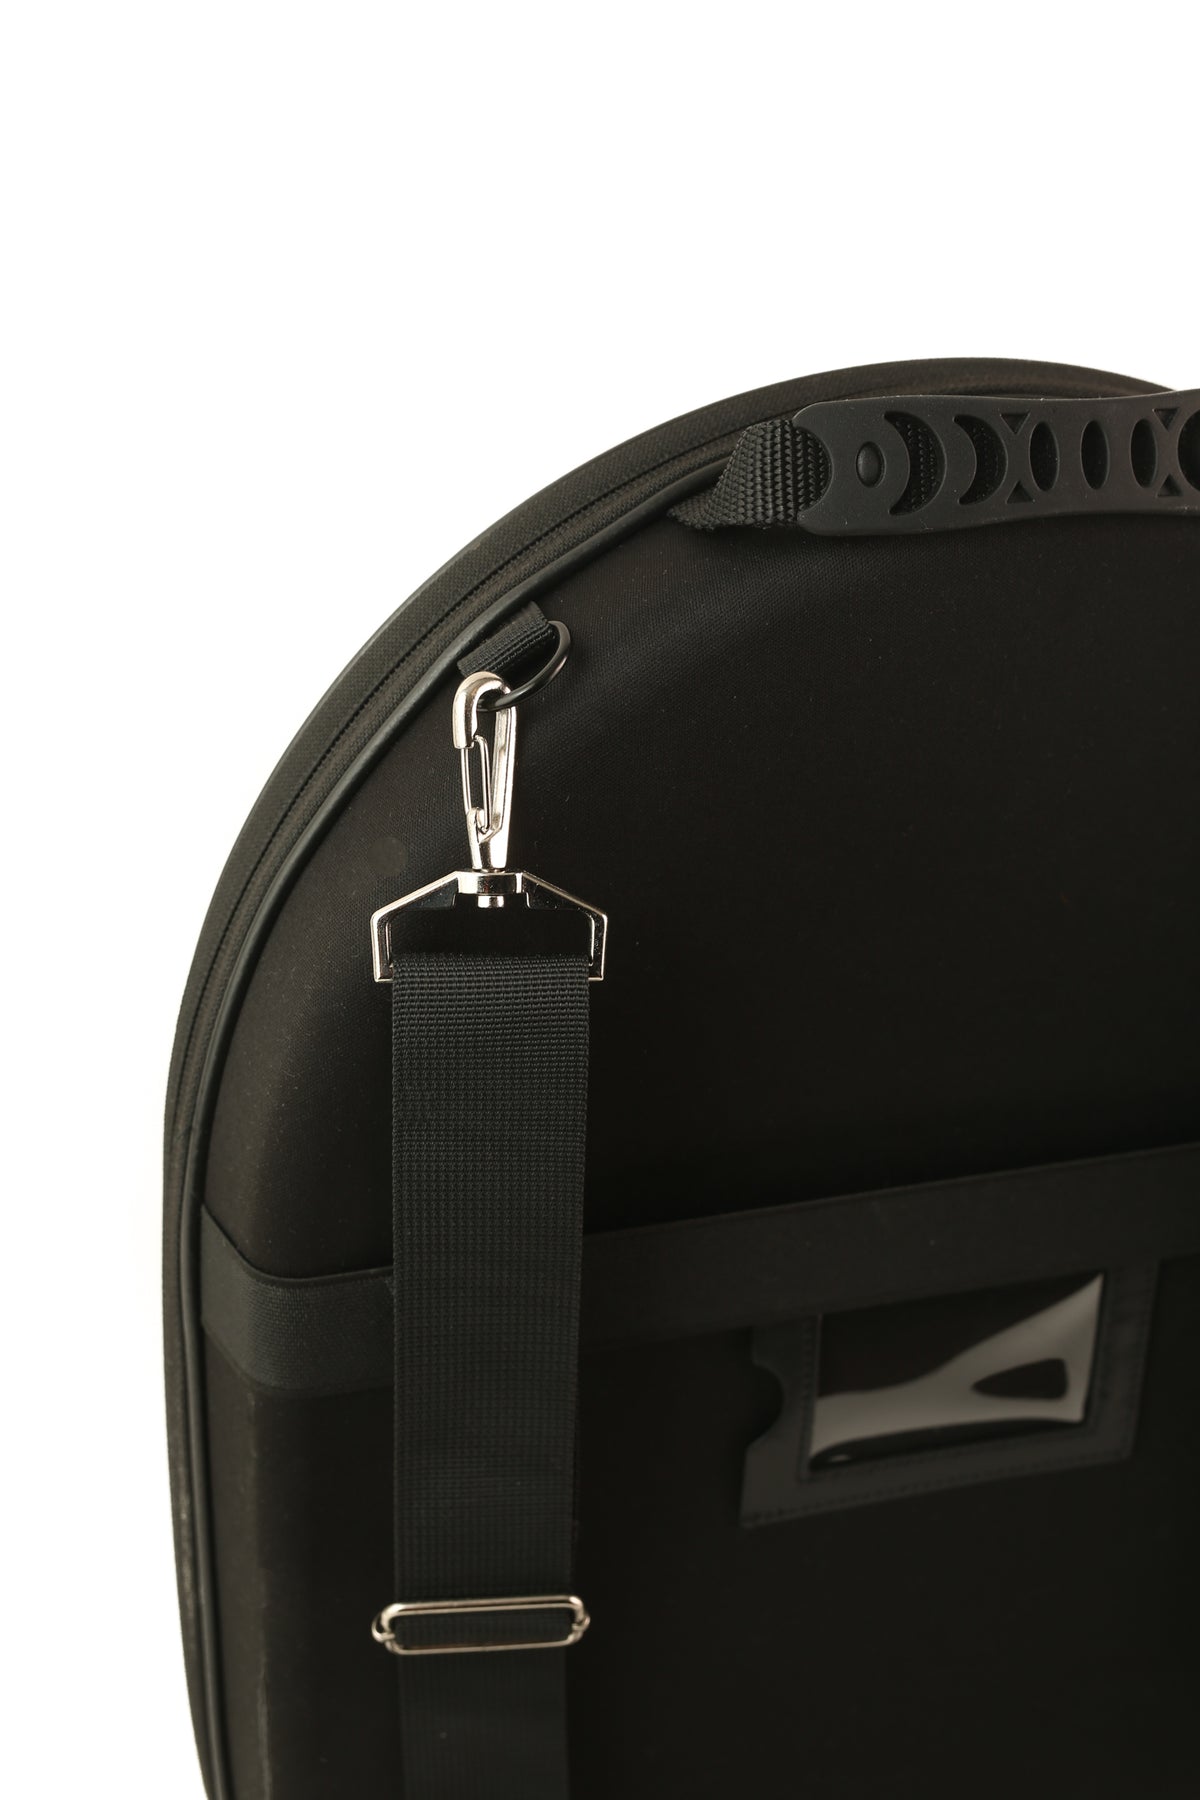 Travel Hat Box Crush-proof Fedora Travel Case Carry On Hat luggage – Atzi  Hats